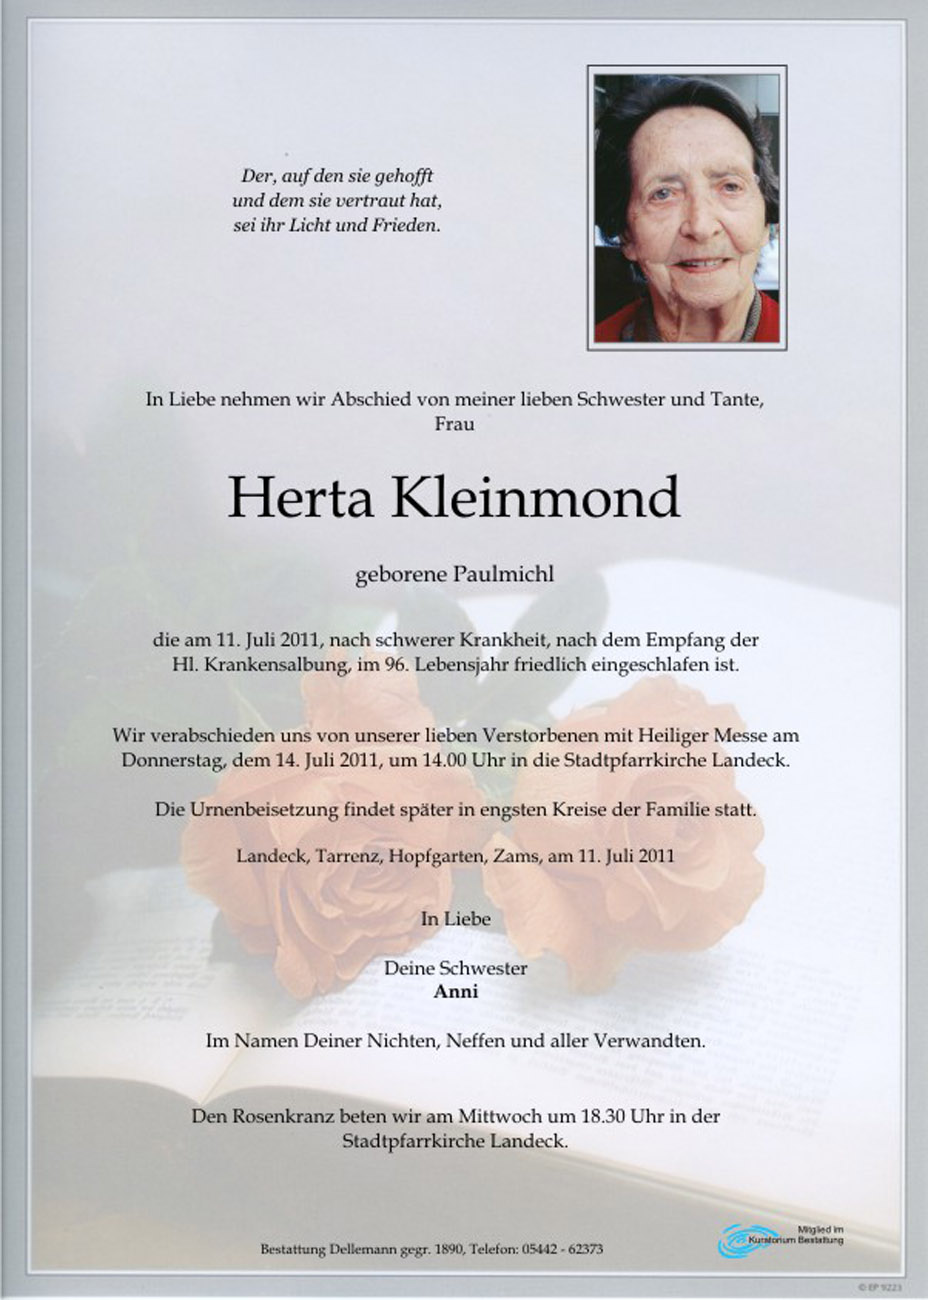   Herta Kleinmond